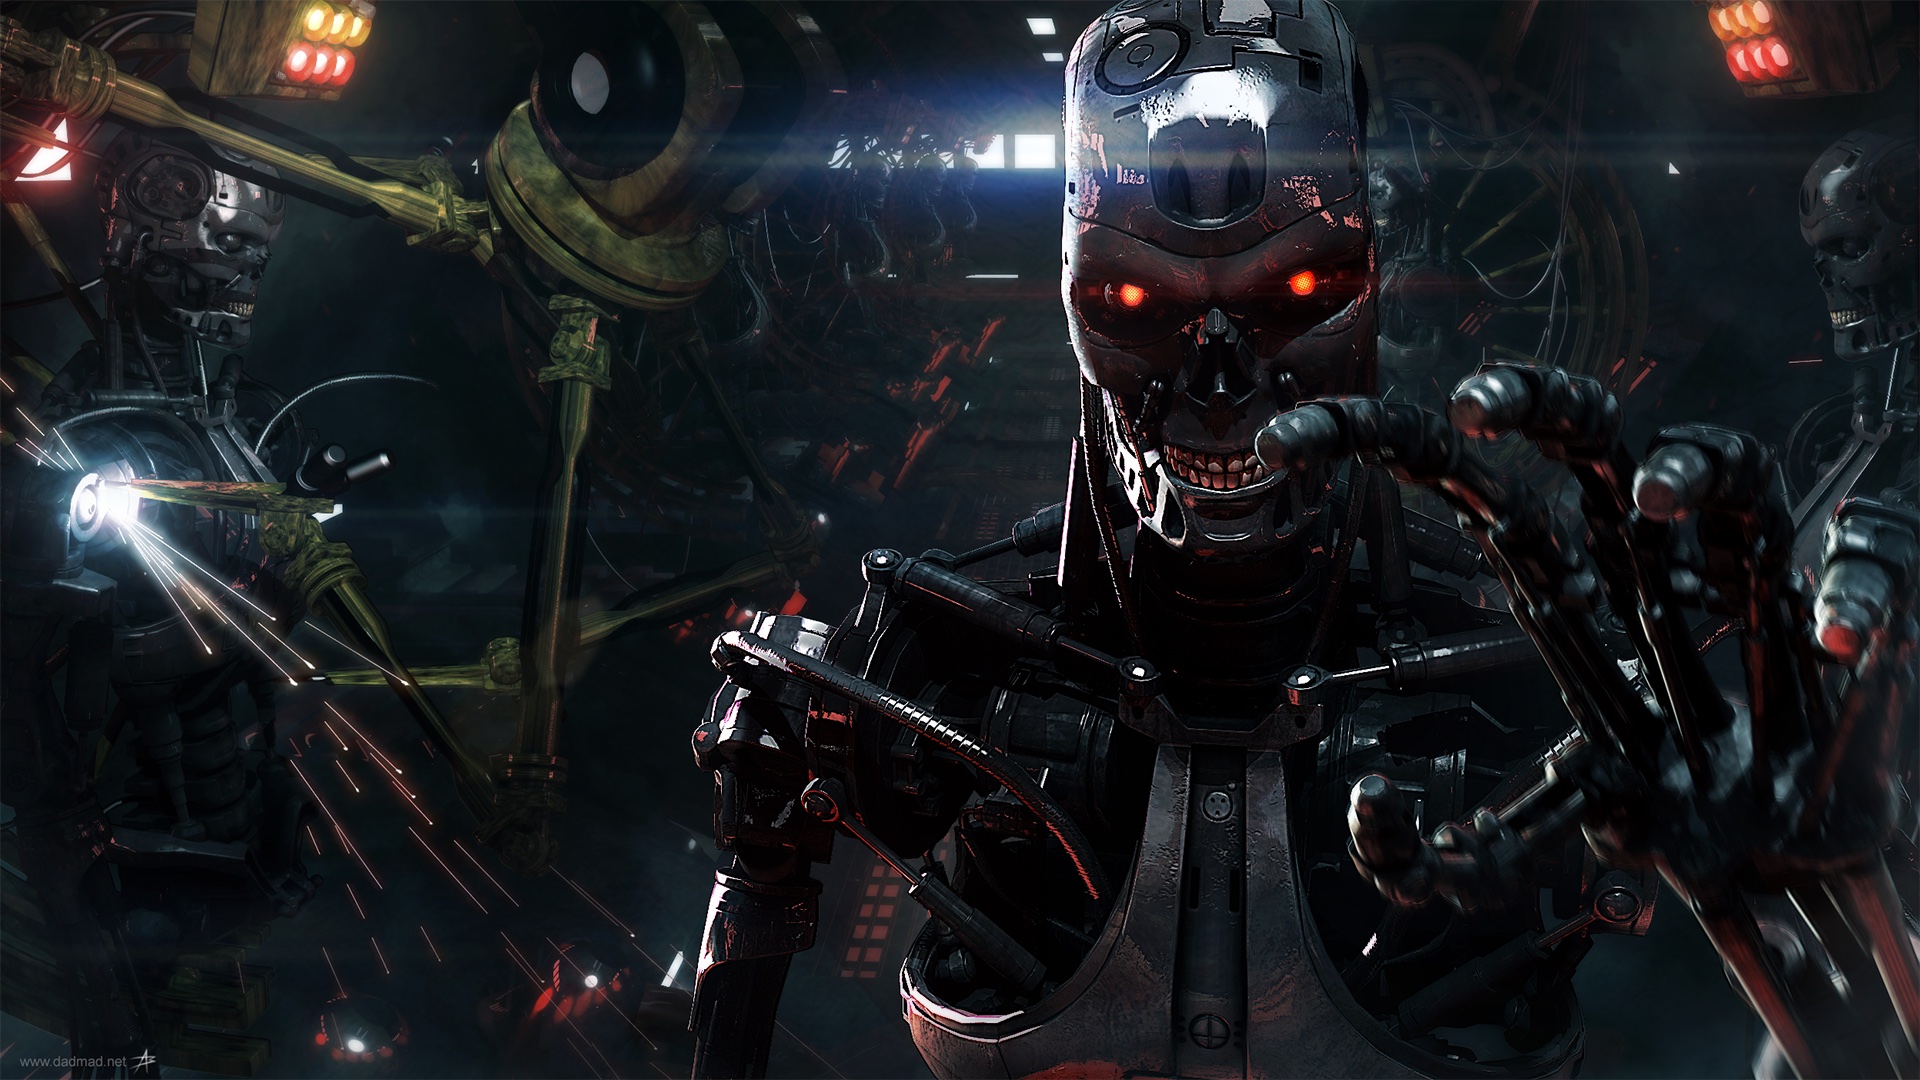 Terminator artwork. Image credit: http://orig14.deviantart.net/5dbc/f/2014/005/f/5/skynet_t800_factory_2__wallpaper__by_dadmad-d70yq68.png